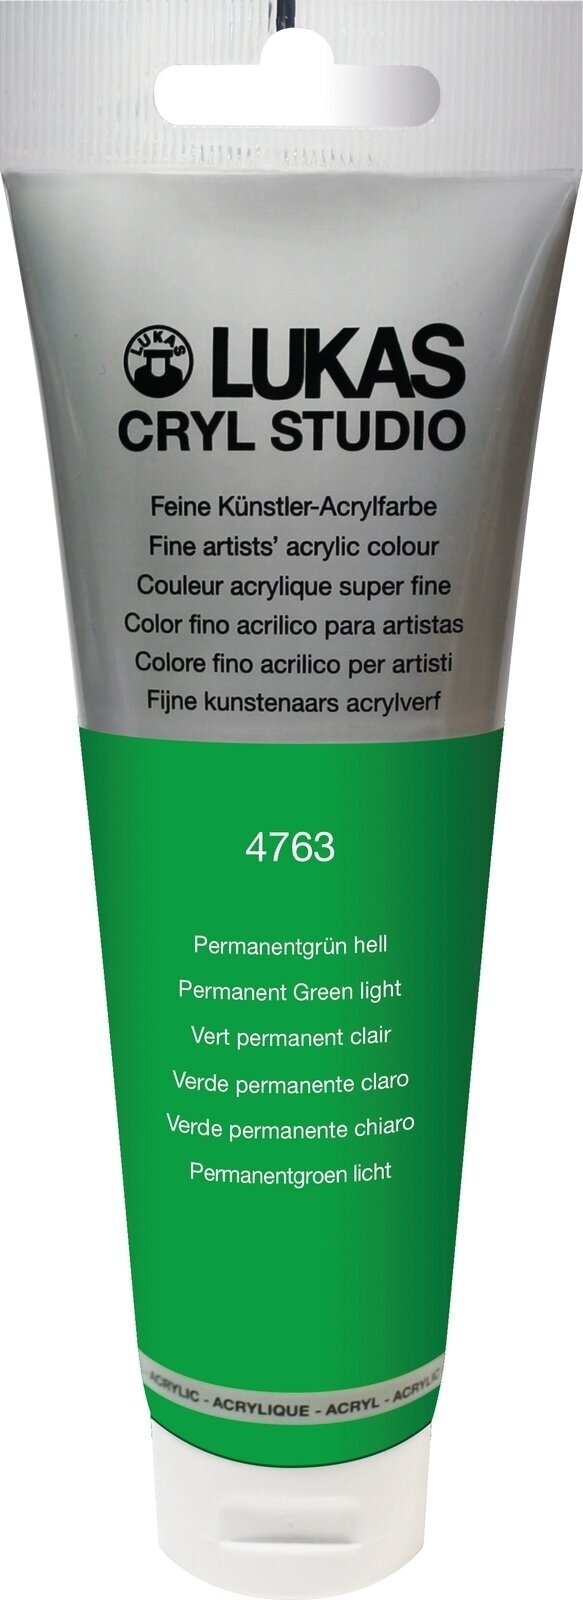 Peinture acrylique Lukas Cryl Studio Peinture acrylique 125 ml Permanent Green Light